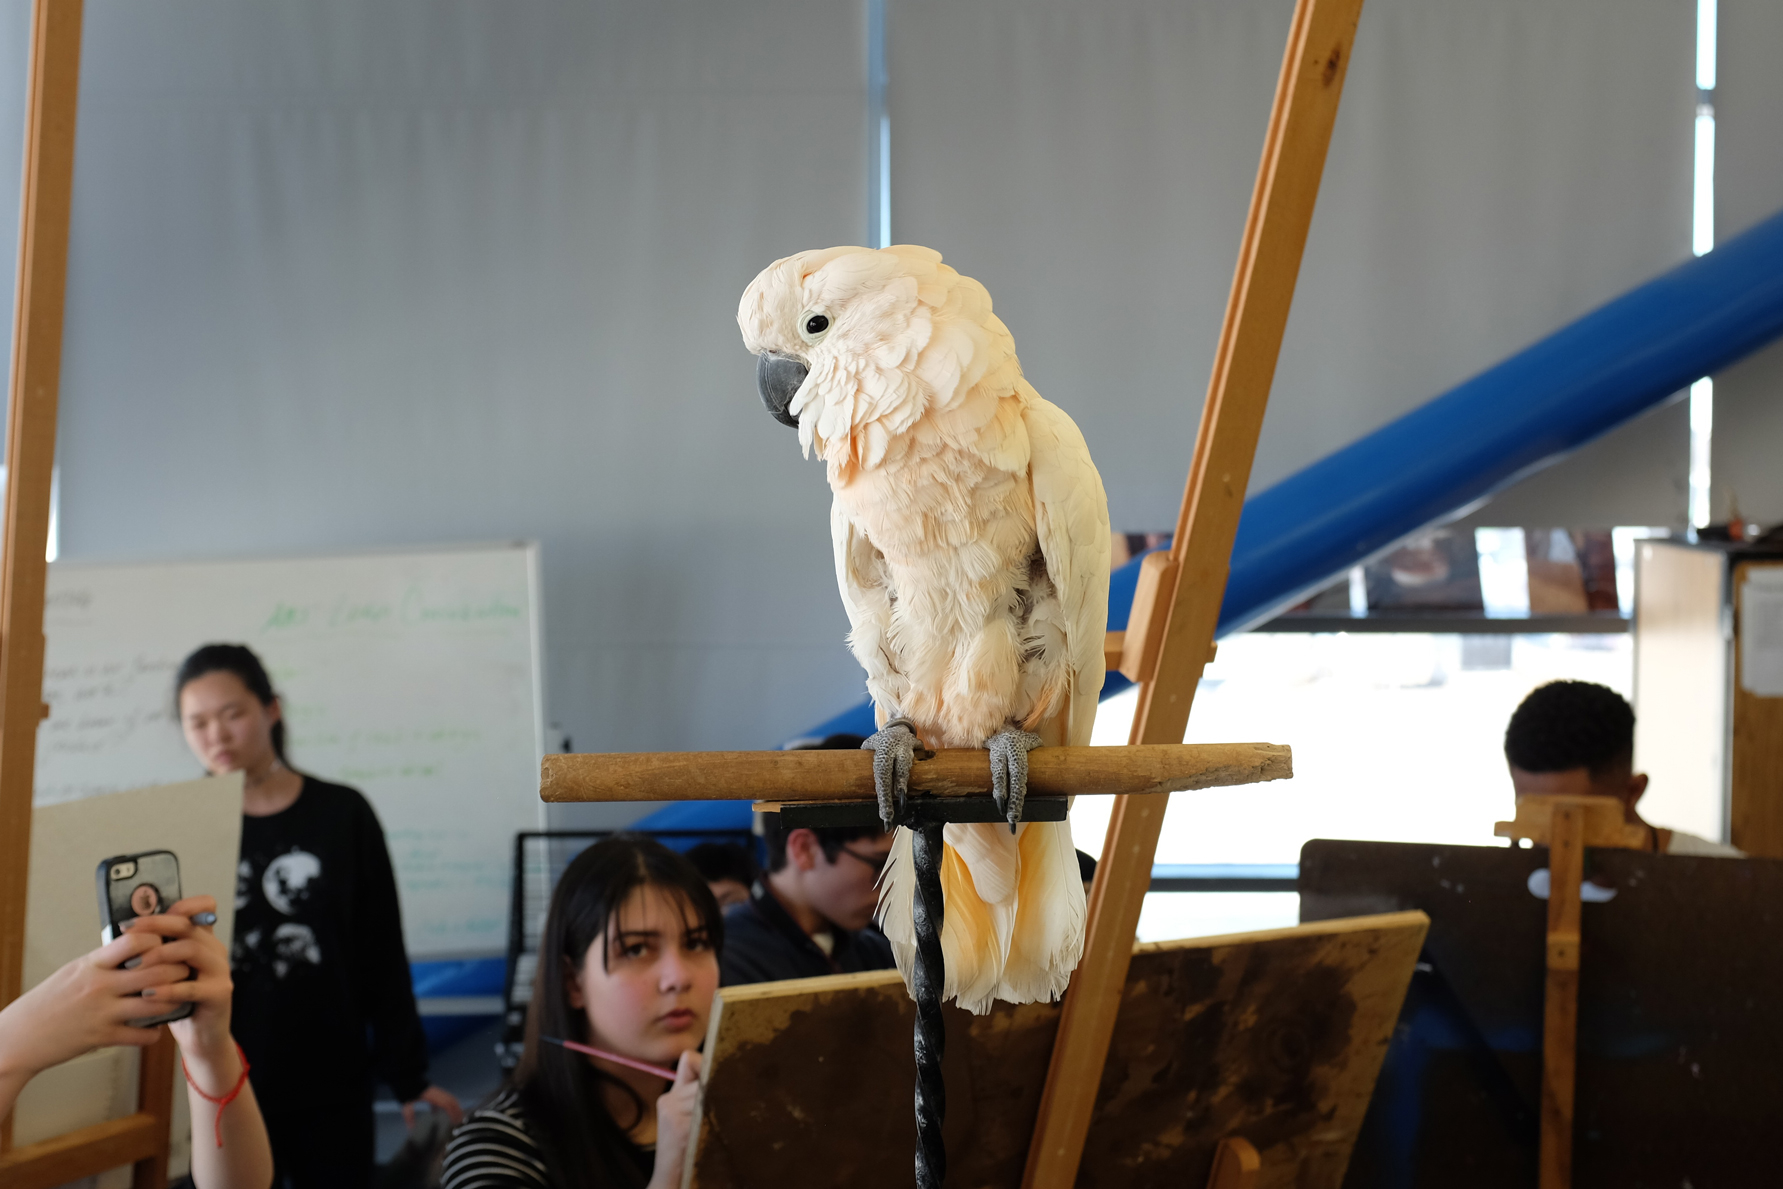 A Talking Parrot at a High School